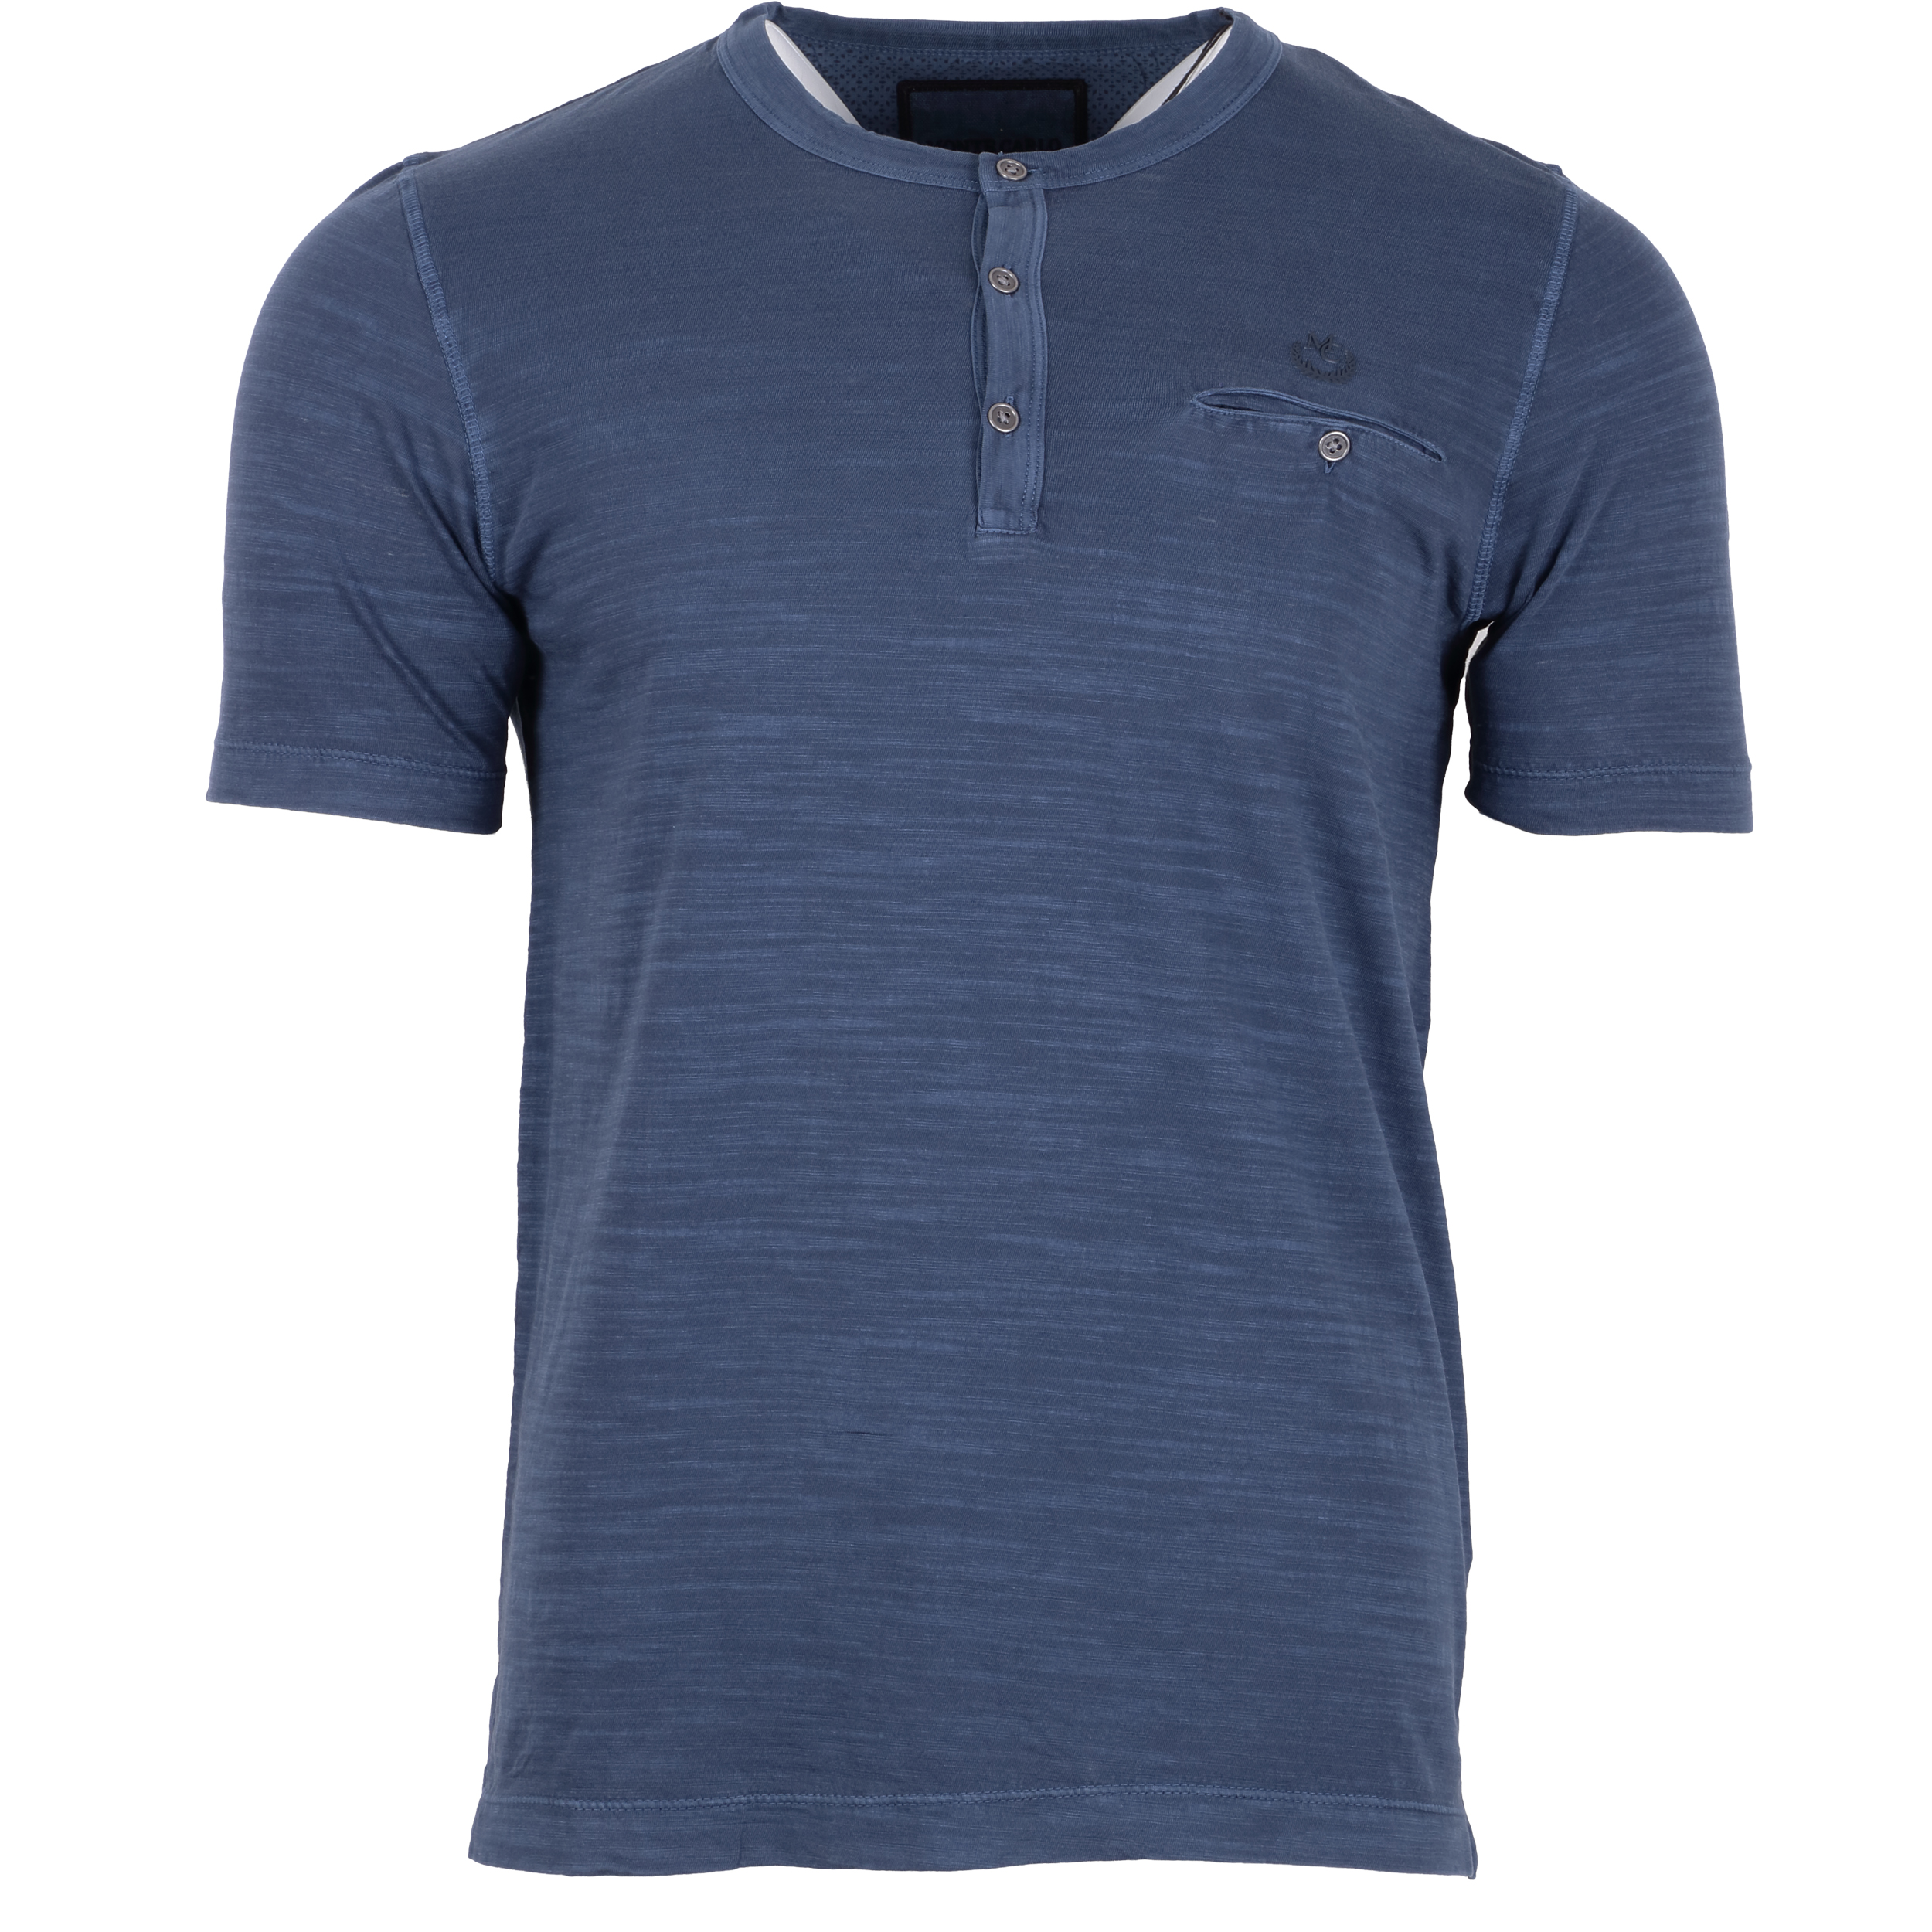 Monte Carlo Herren T-Shirt Serafino XXL dunkelblau